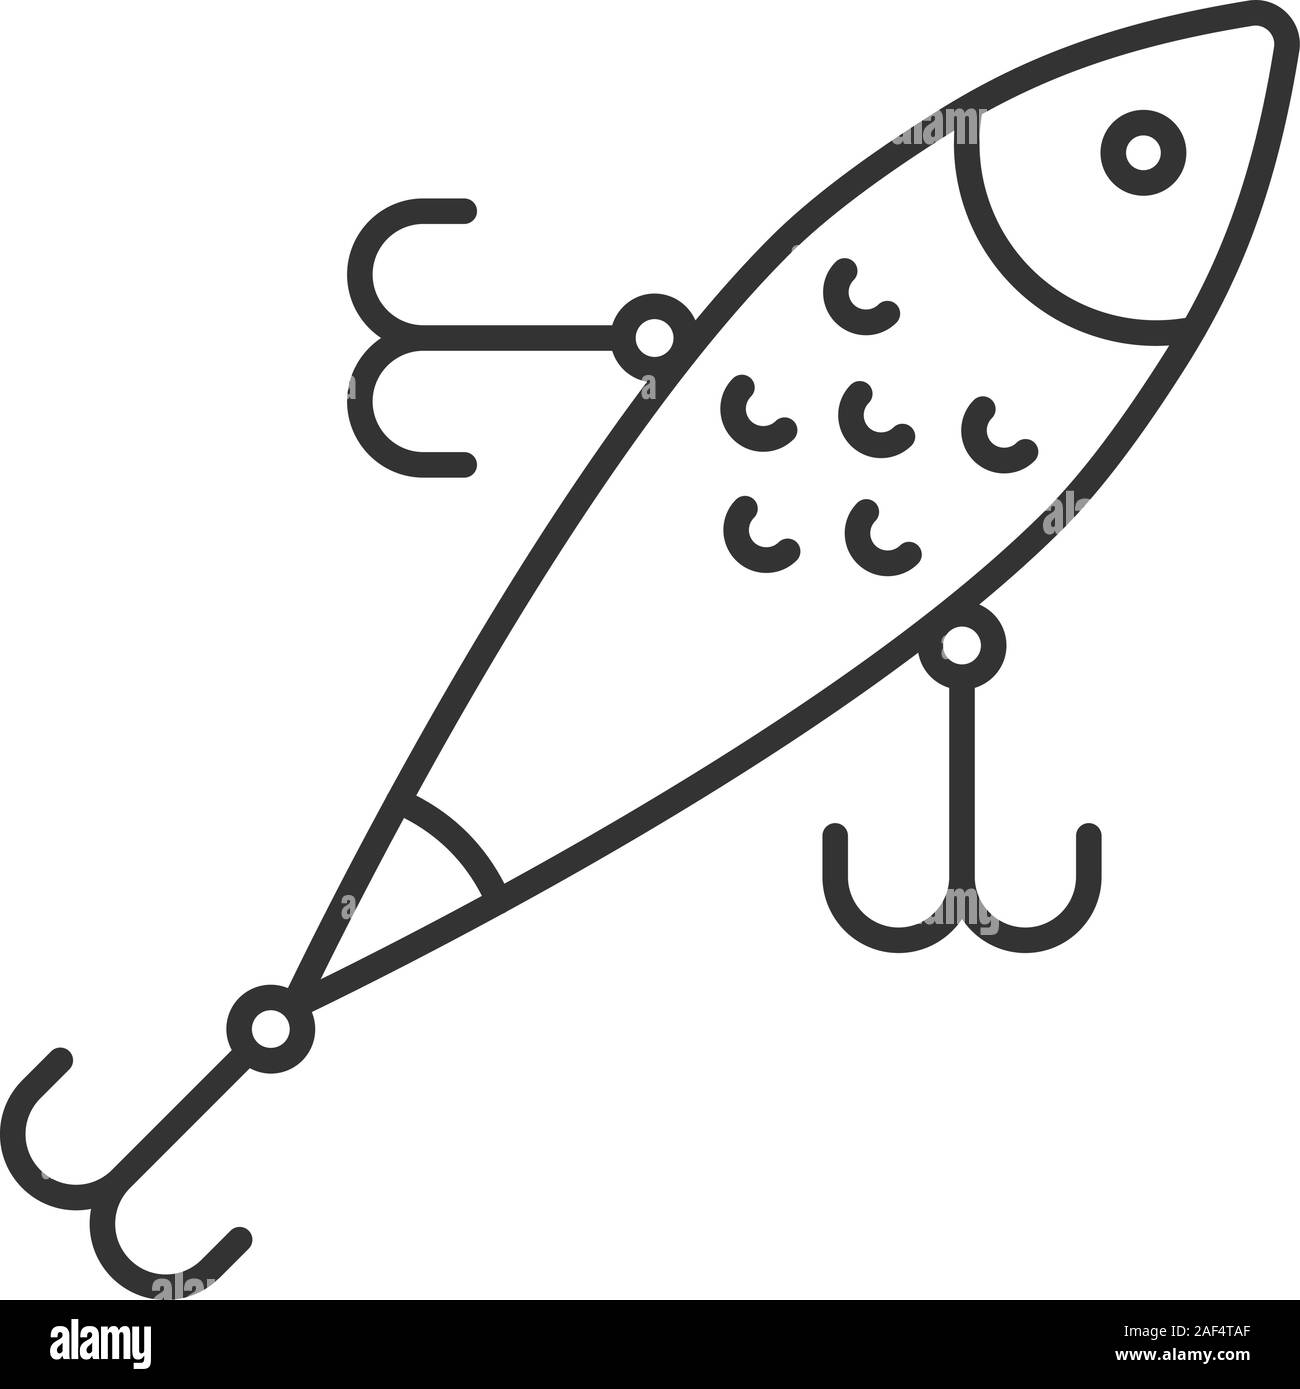 https://c8.alamy.com/comp/2AF4TAF/lure-linear-icon-thin-line-illustration-spool-bait-fishing-gear-contour-symbol-vector-isolated-outline-drawing-2AF4TAF.jpg